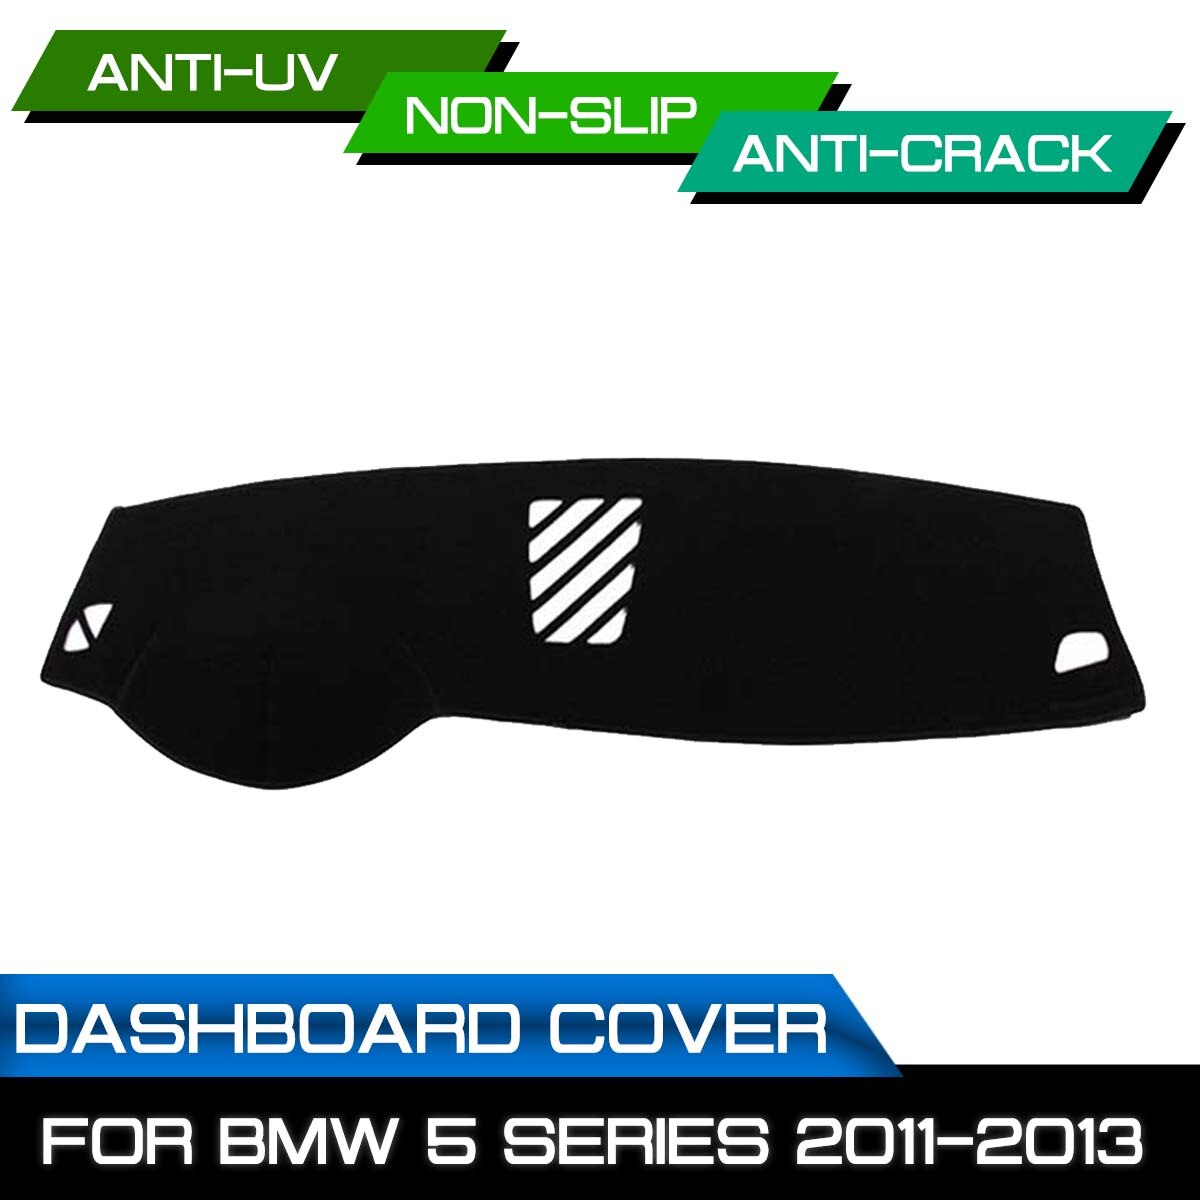 Auto Dashboard Mat Anti-Vuile Antislip Voor Bmw 5 Serie Dash Cover Mat Uv bescherming Schaduw Sticker